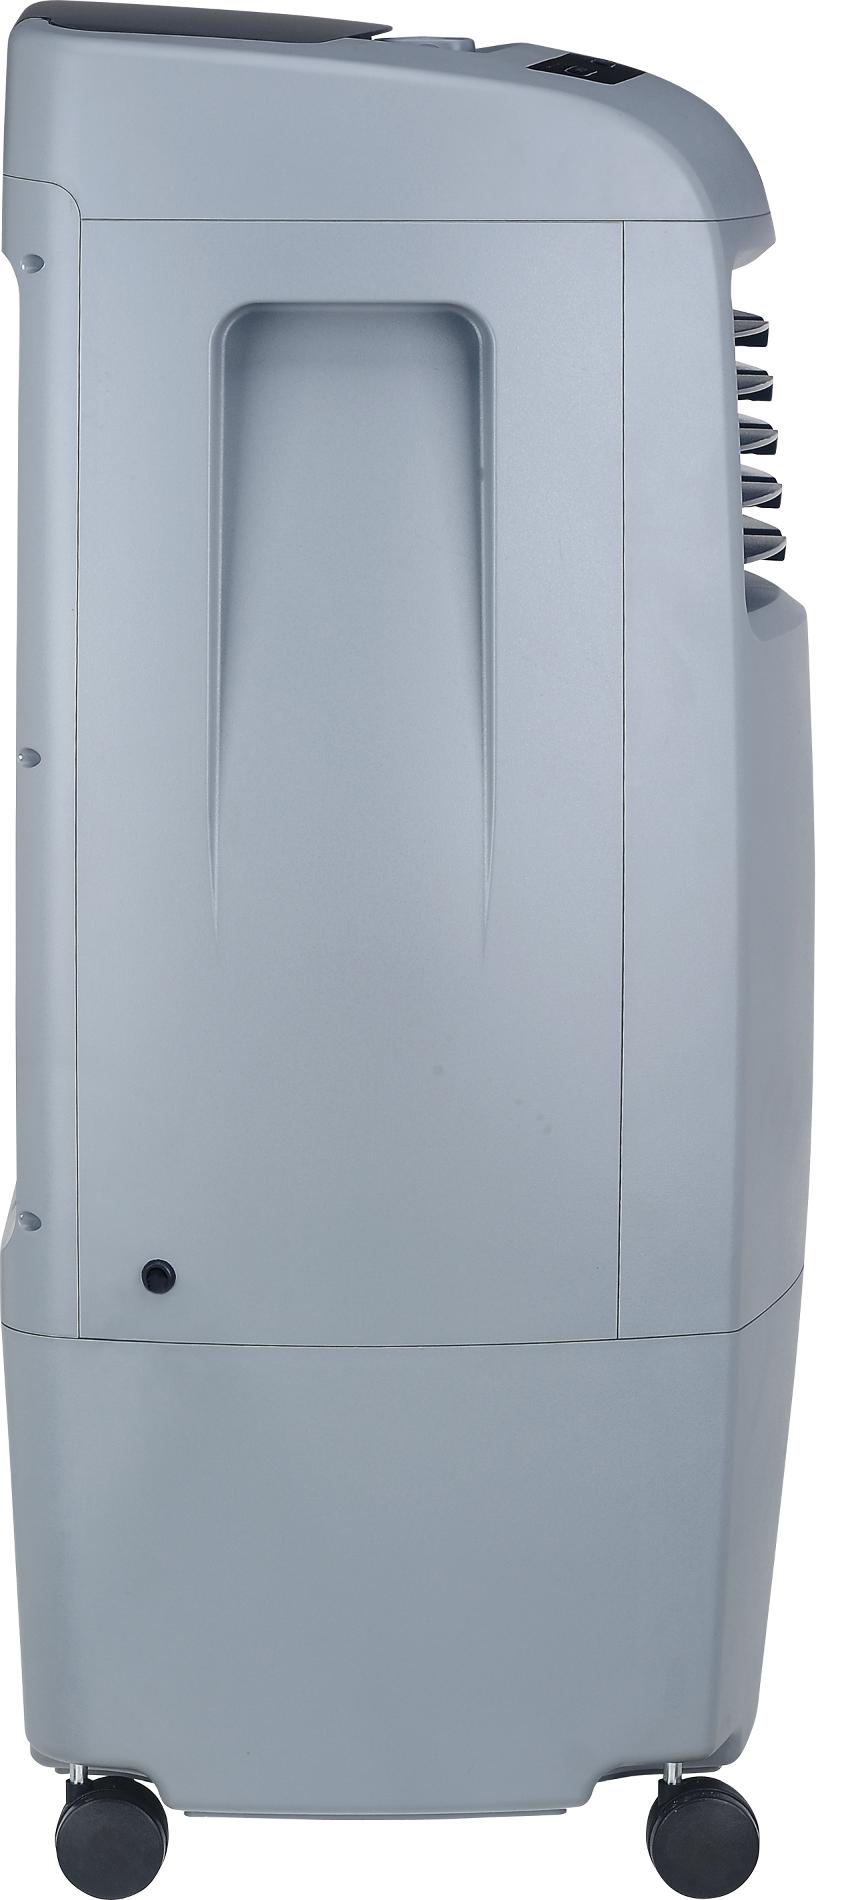 Honeywell 52 Pt. Indoor/Outdoor Portable Evaporative Air Cooler with